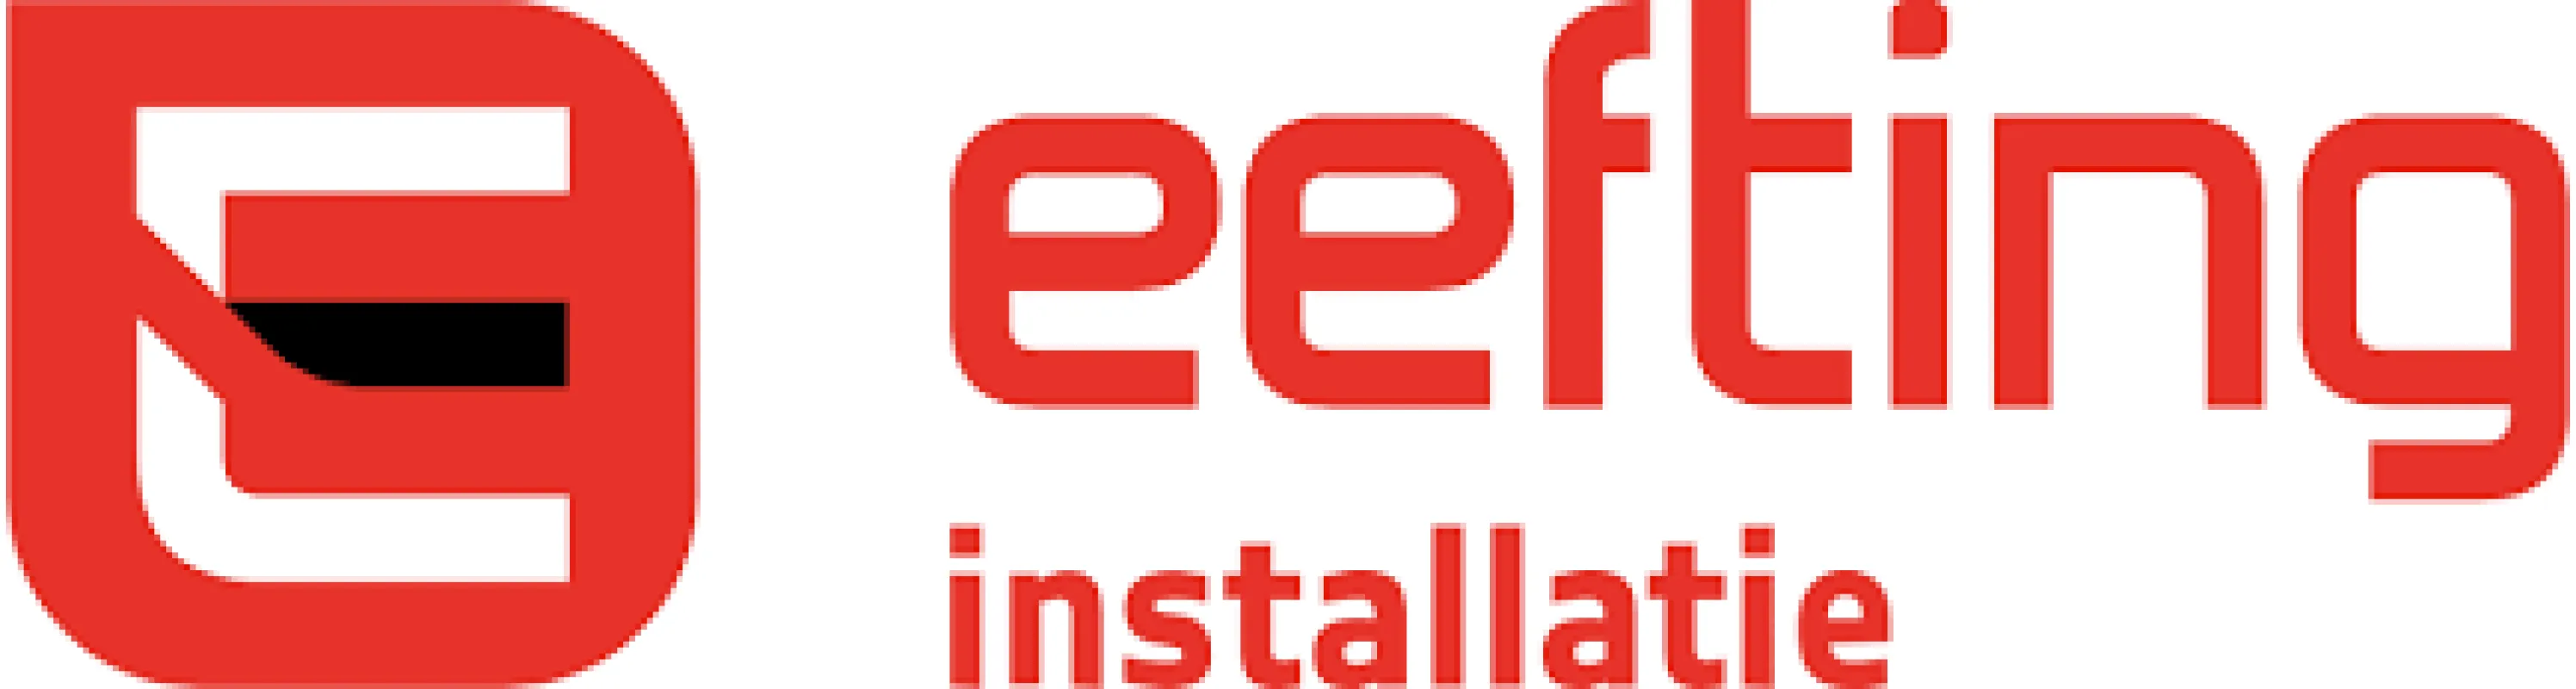 Eefting logo